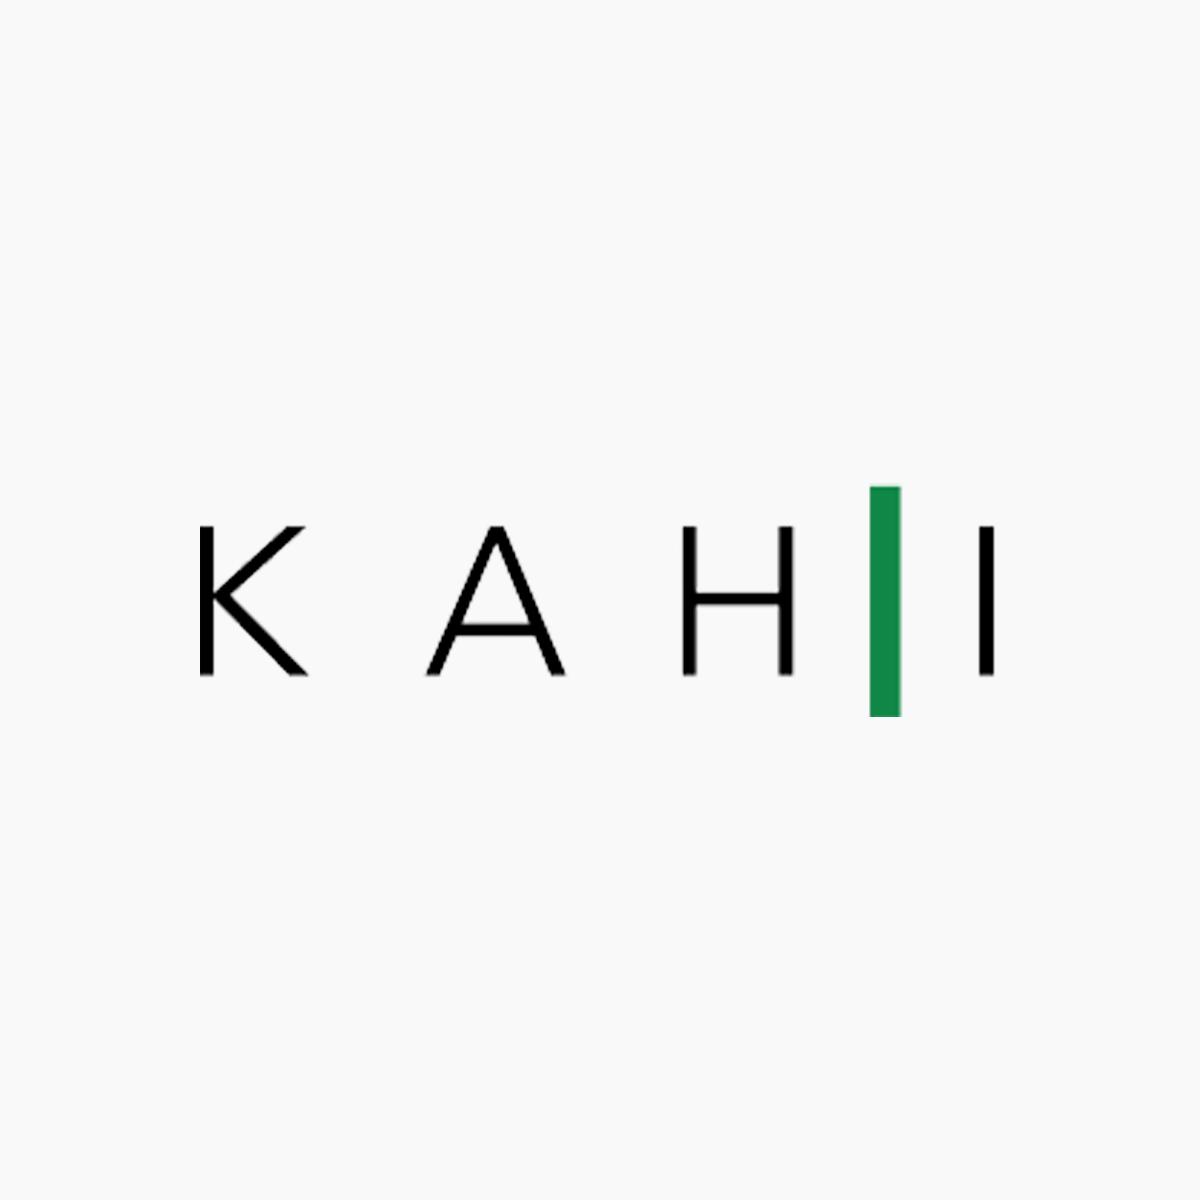 KAHI-logo-image